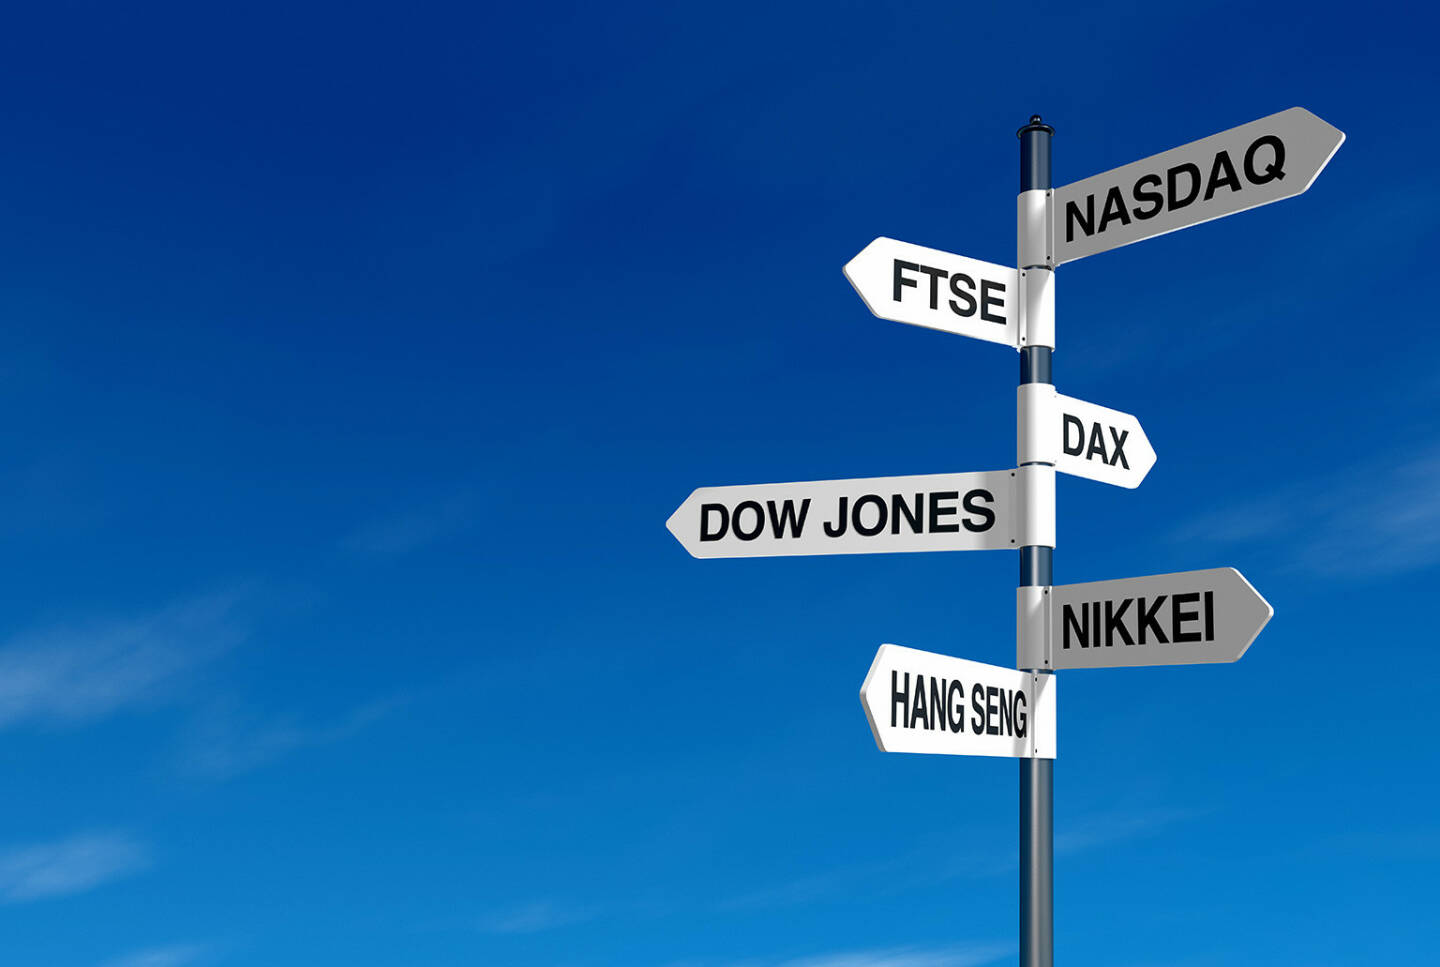 Aktienindizes, Index, Indizes, DAX, Dow Jones, NASDAQ, FTSE, Nikkei, Hang Seng http://www.shutterstock.com/de/pic-92345902/stock-photo-signpost-with-stock-market-names-and-blue-sky.html